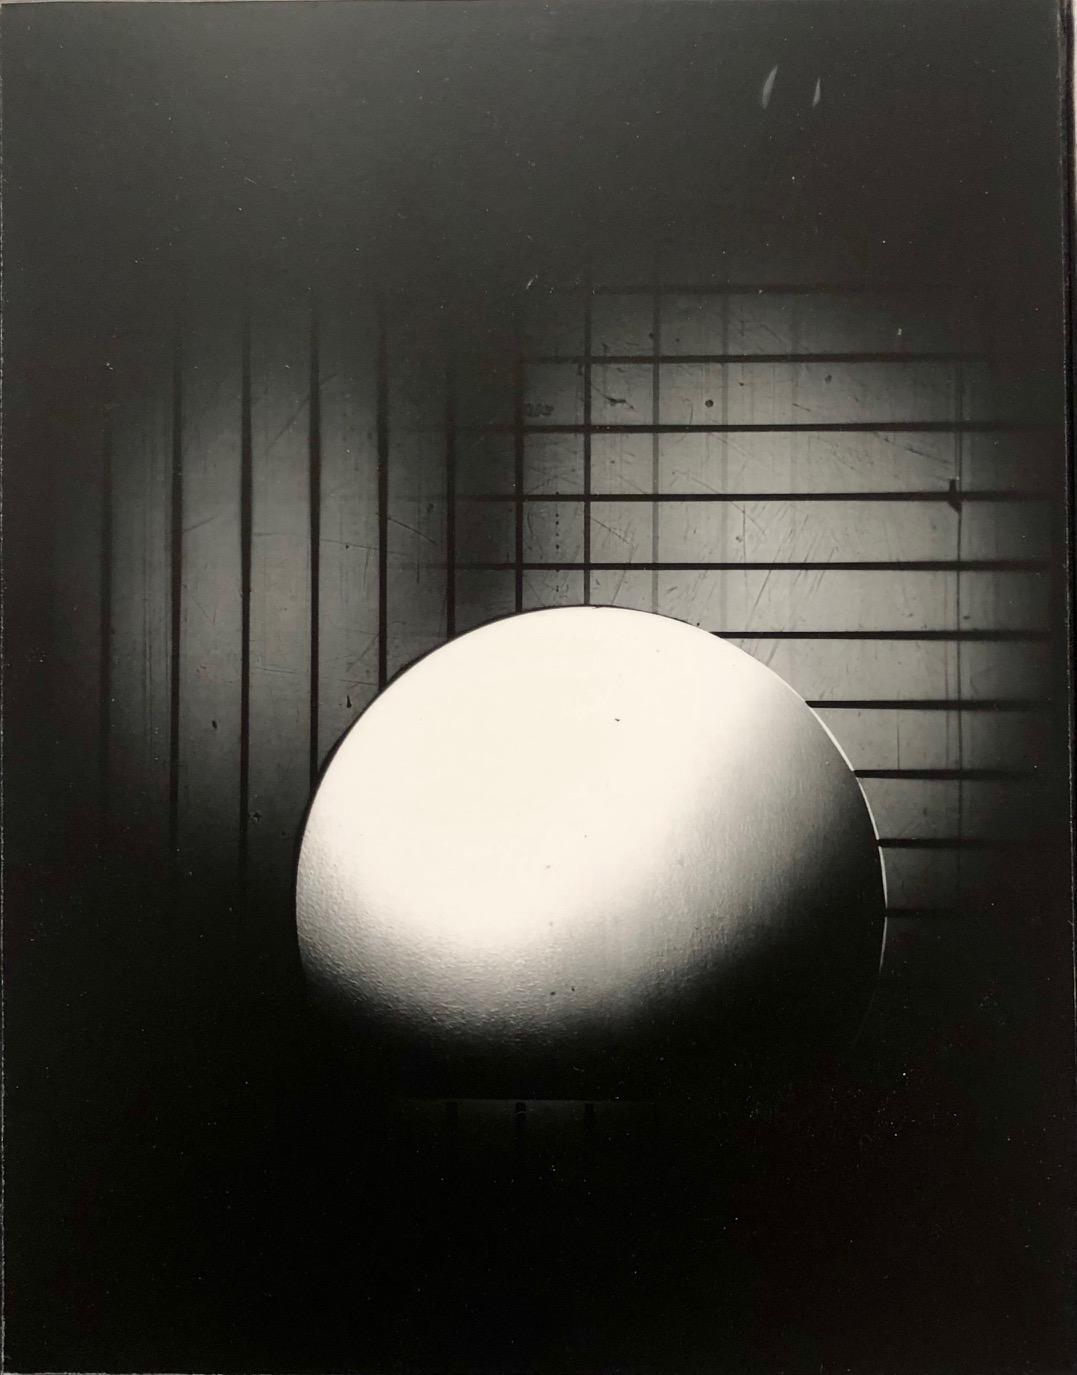 Juan Fernandez, Sphere 2 (Positive), 2022, Laminated silver gelatin print mounted on masonite, 14” x 11” x 1”